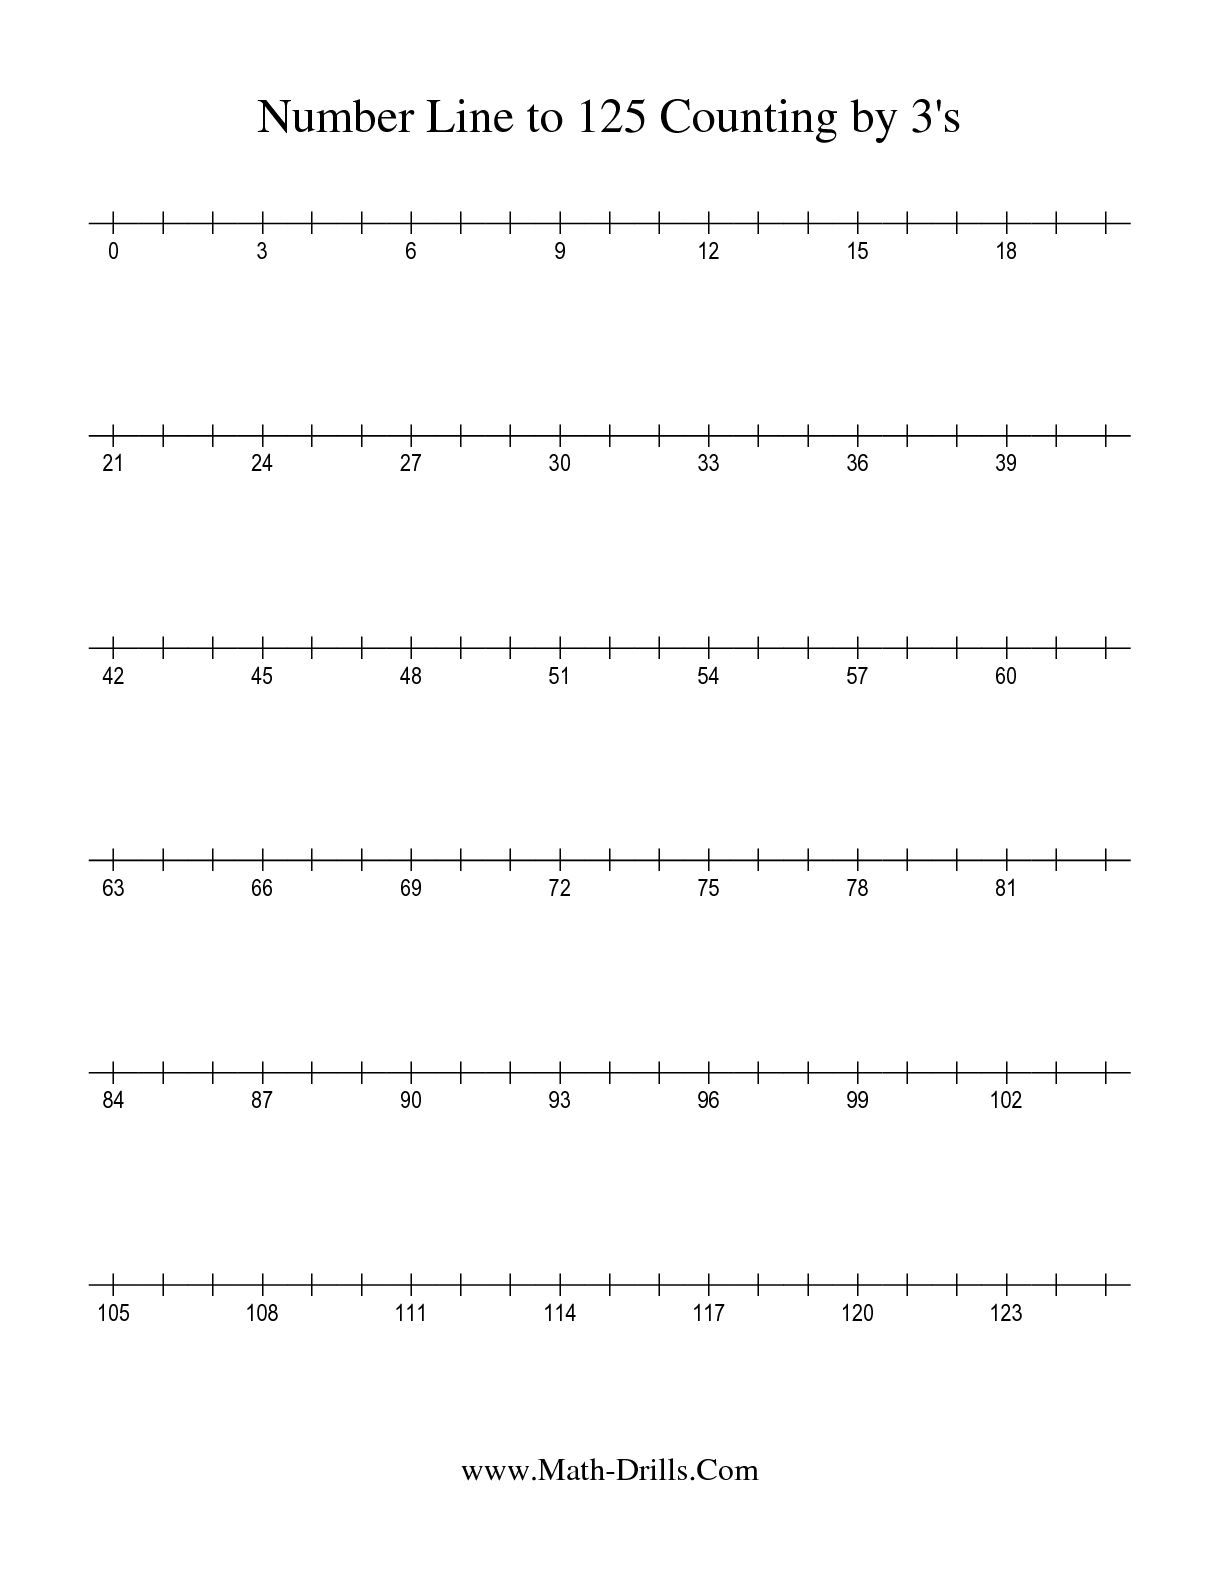 Number Line Counting Worksheet Image